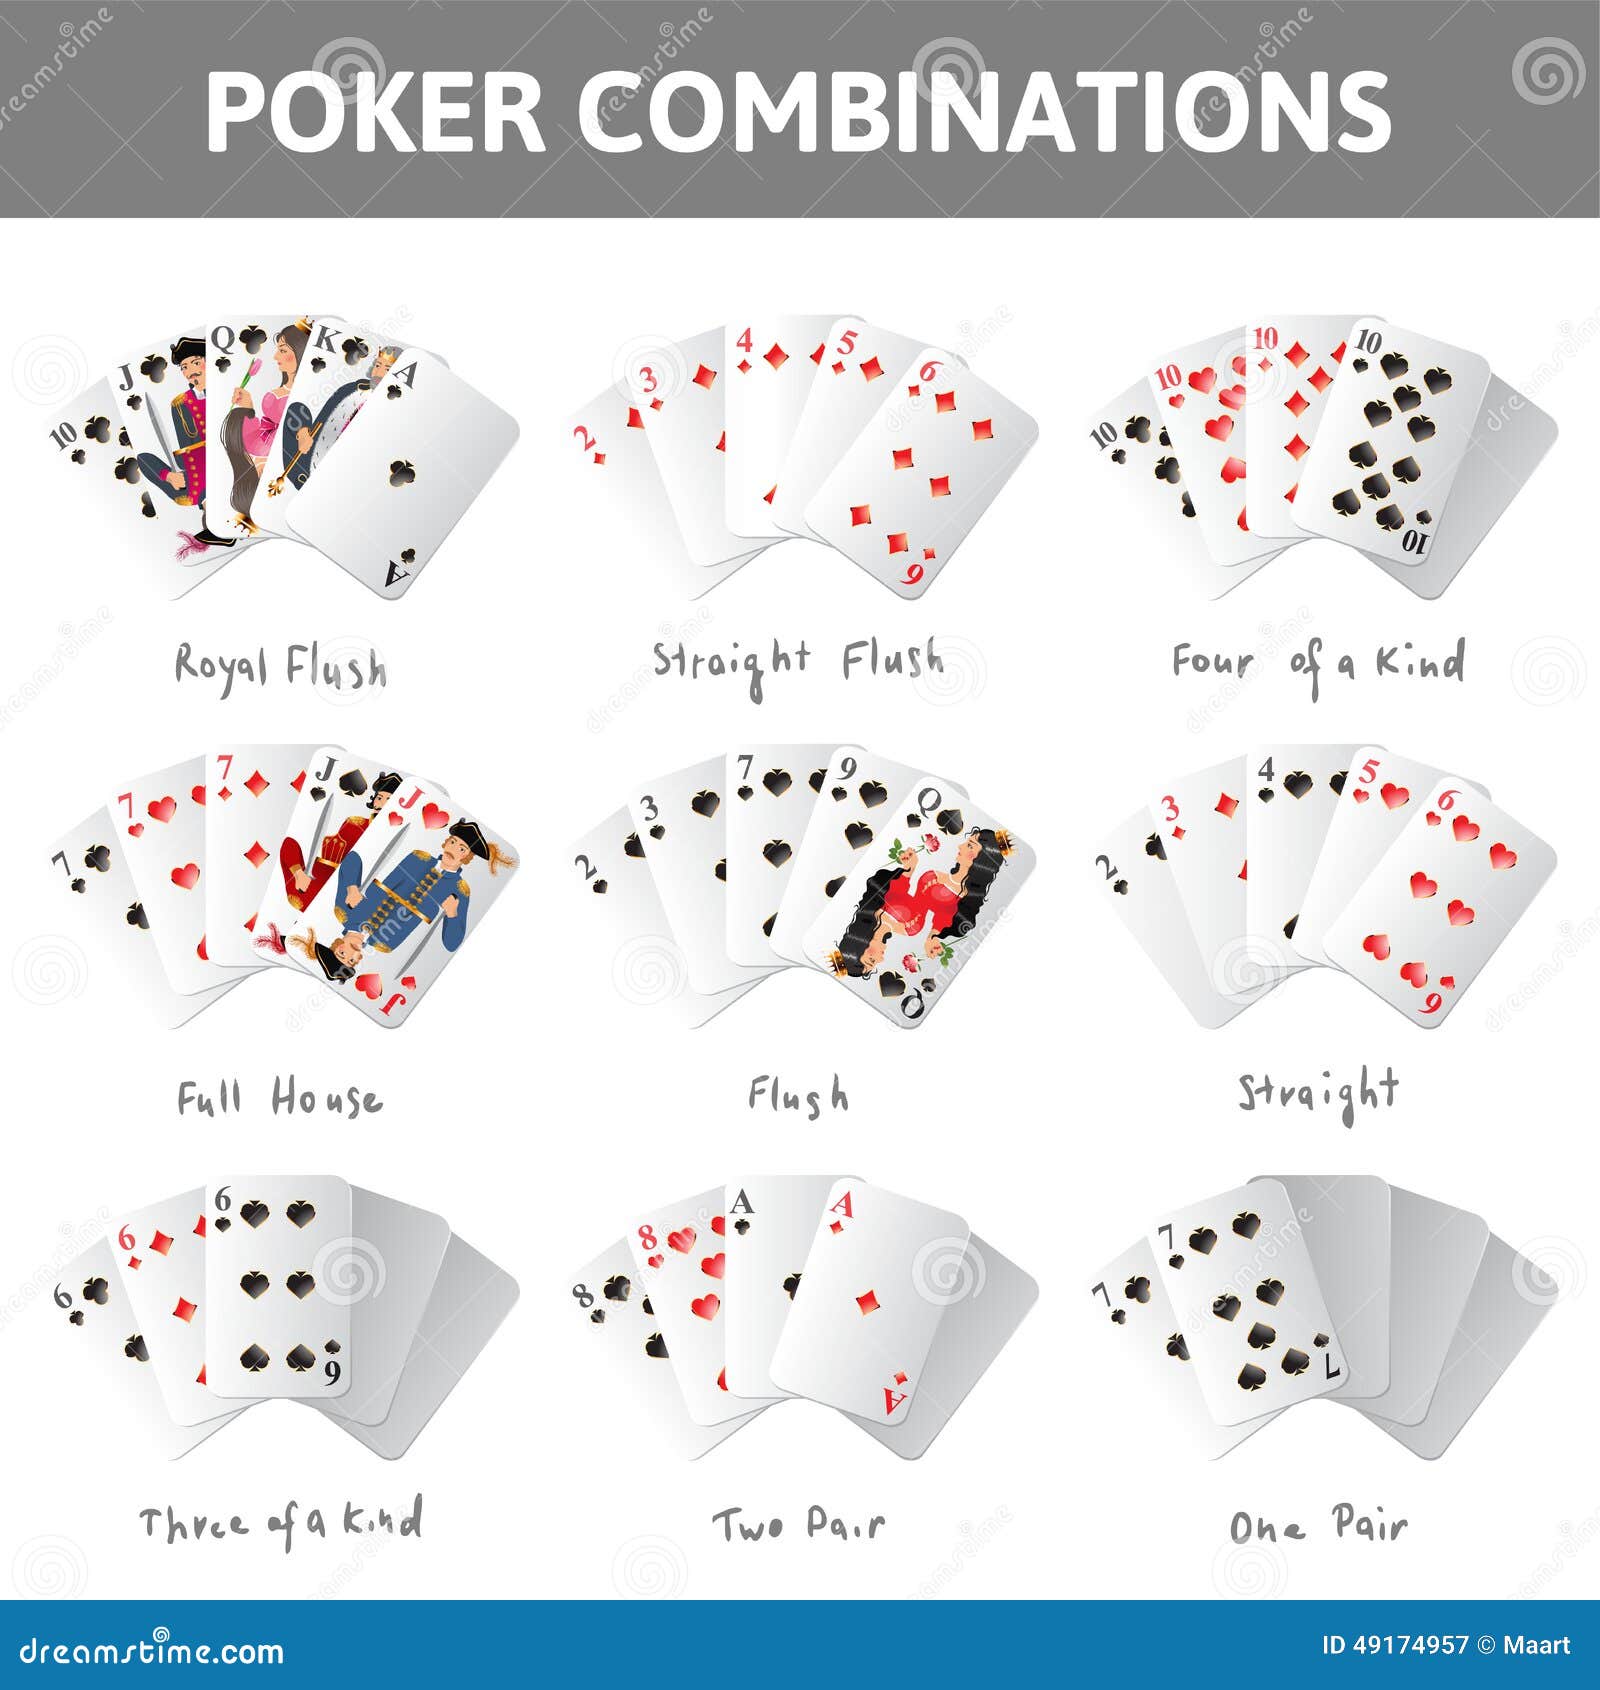 Poker Combinations